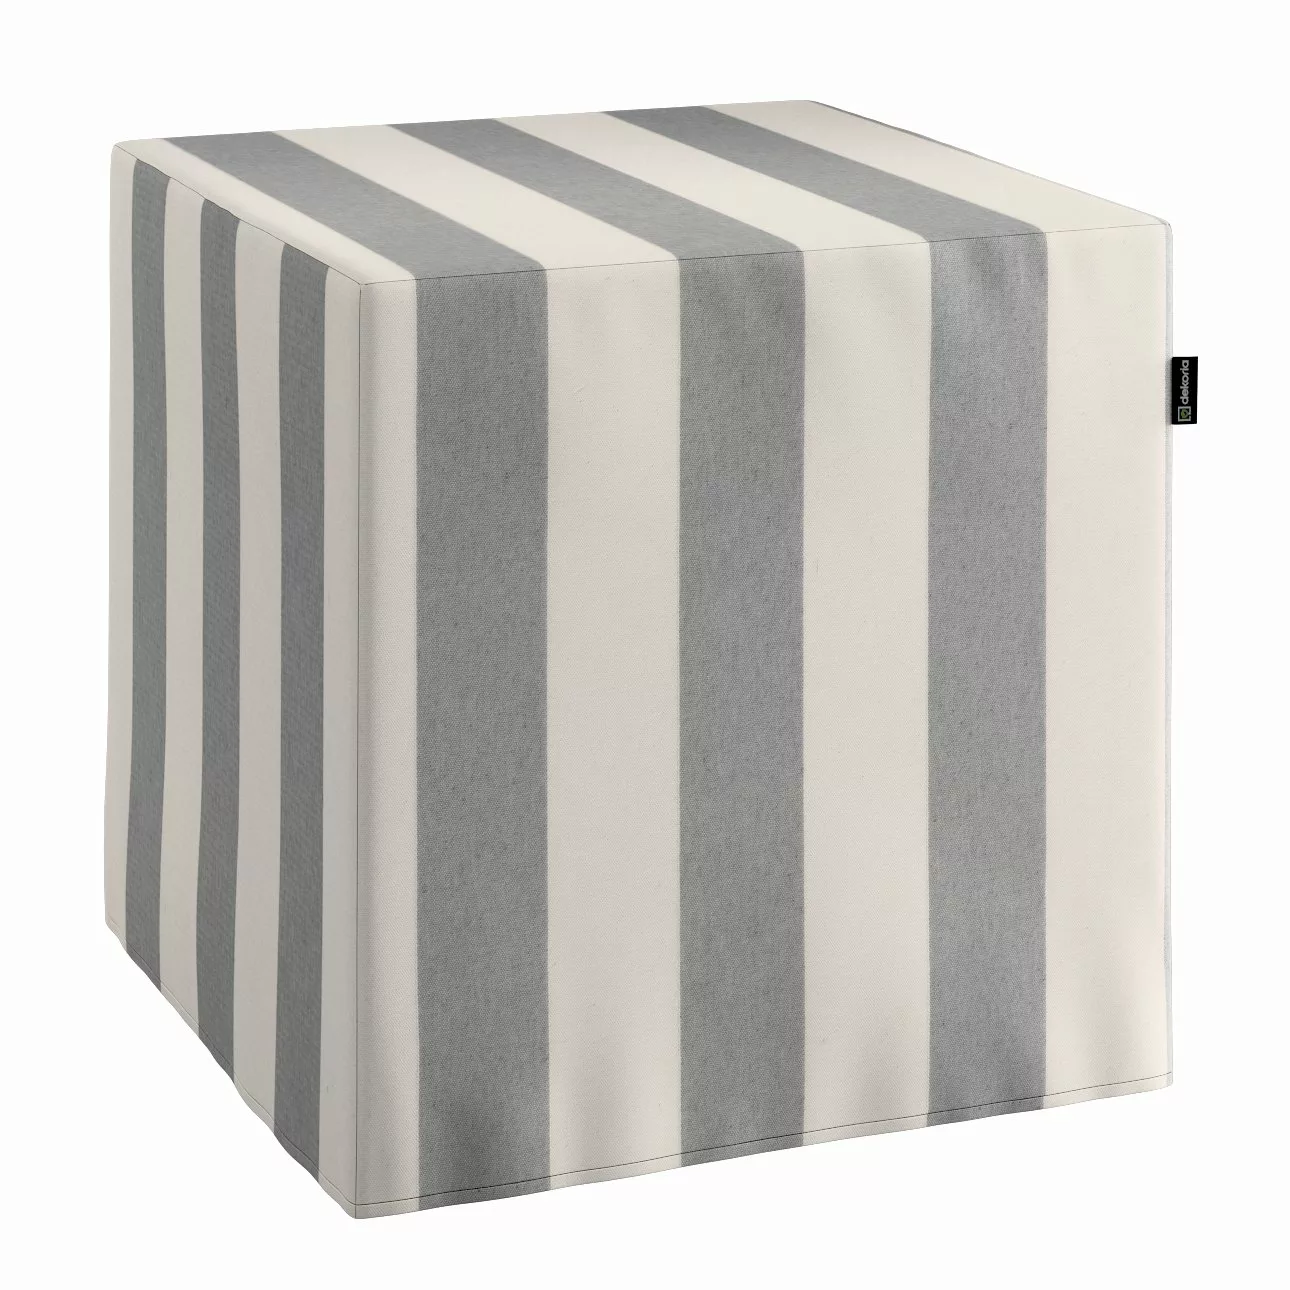 Sitzwürfel, weiß-grau, 40 x 40 x 40 cm, Quadro (143-91) günstig online kaufen